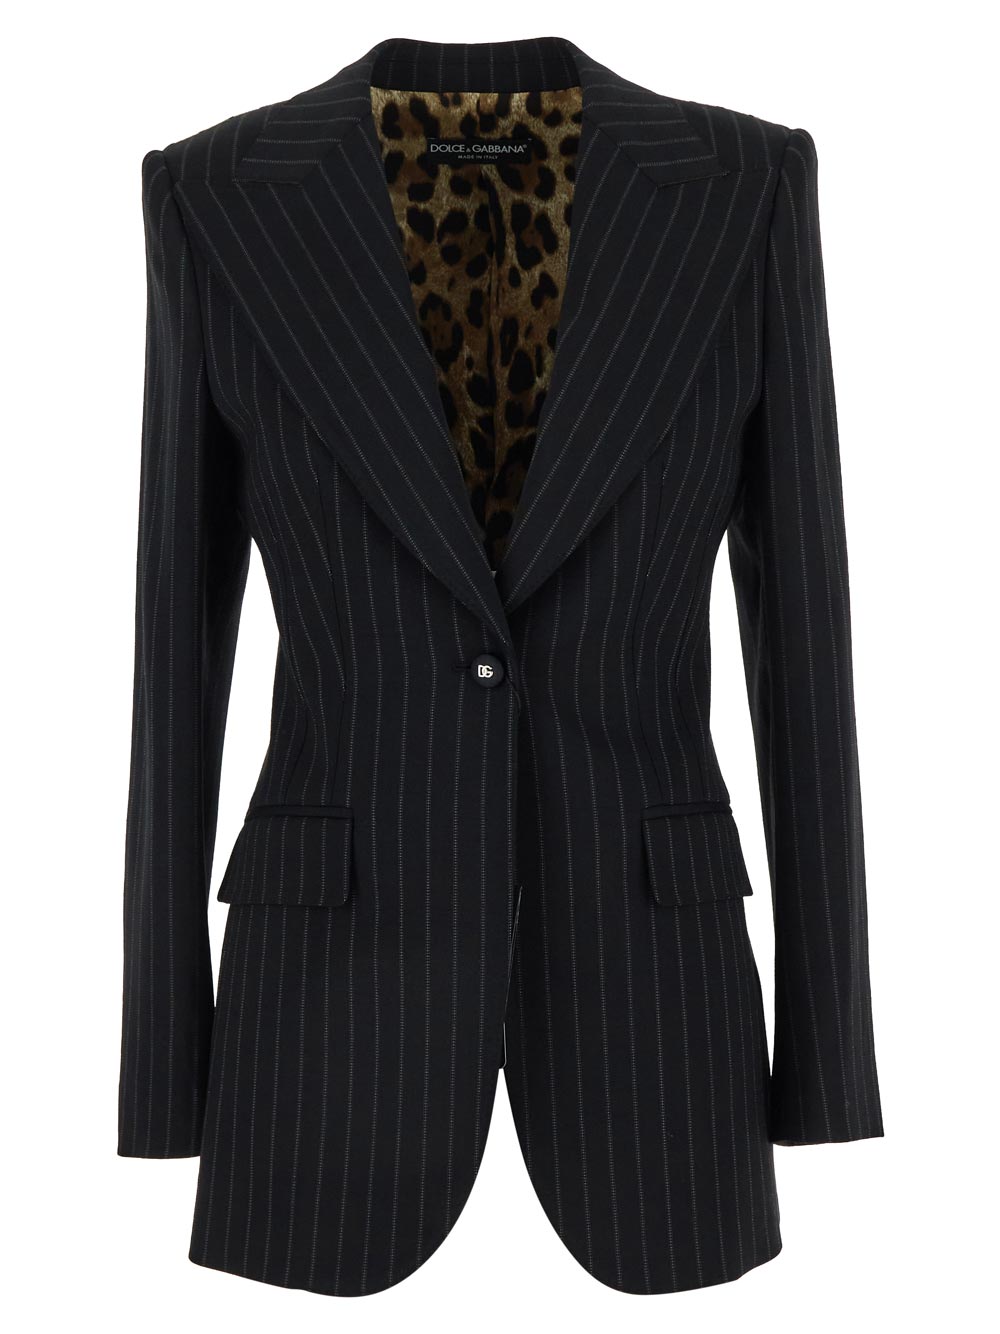 Dolce & Gabbana Single-Breasted Pinstripe Wool Turlington Jacket